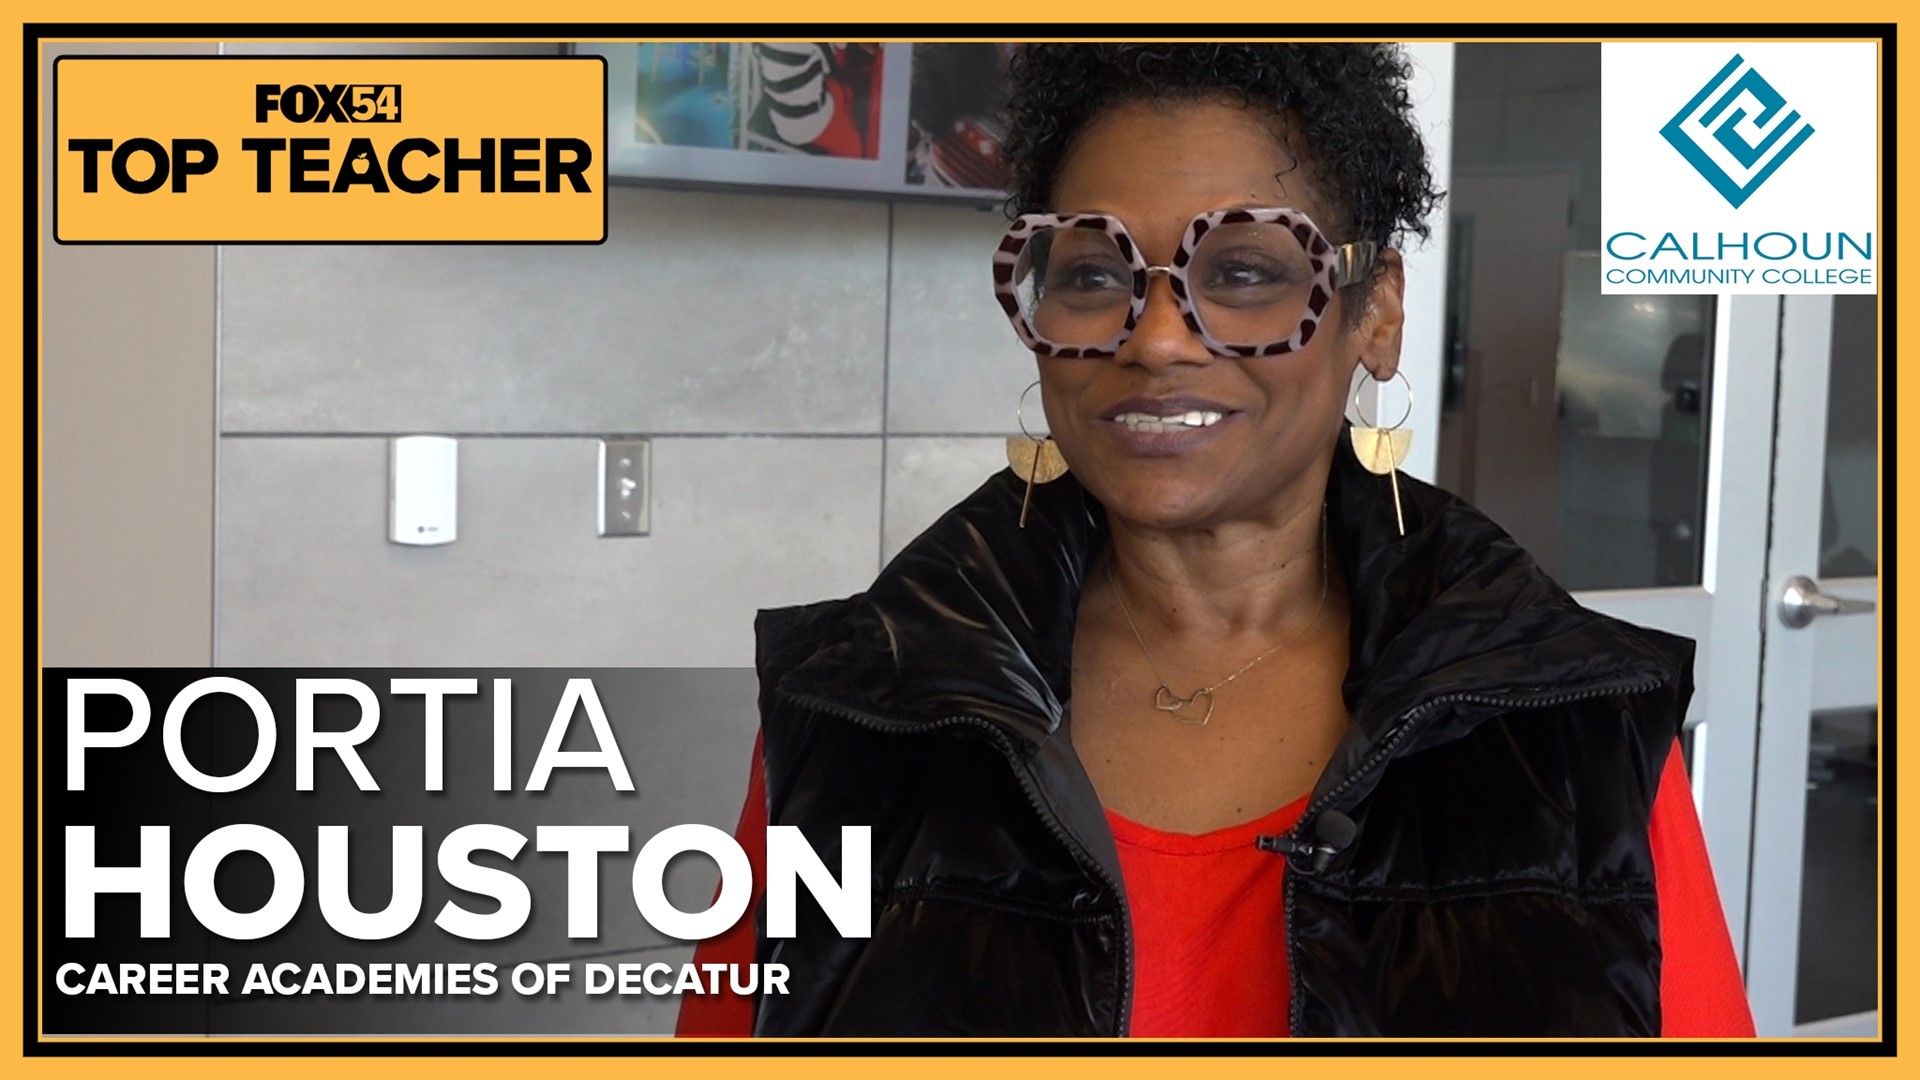 Meet this week's FOX54 Top Teacher from Career Academies of Decatur.